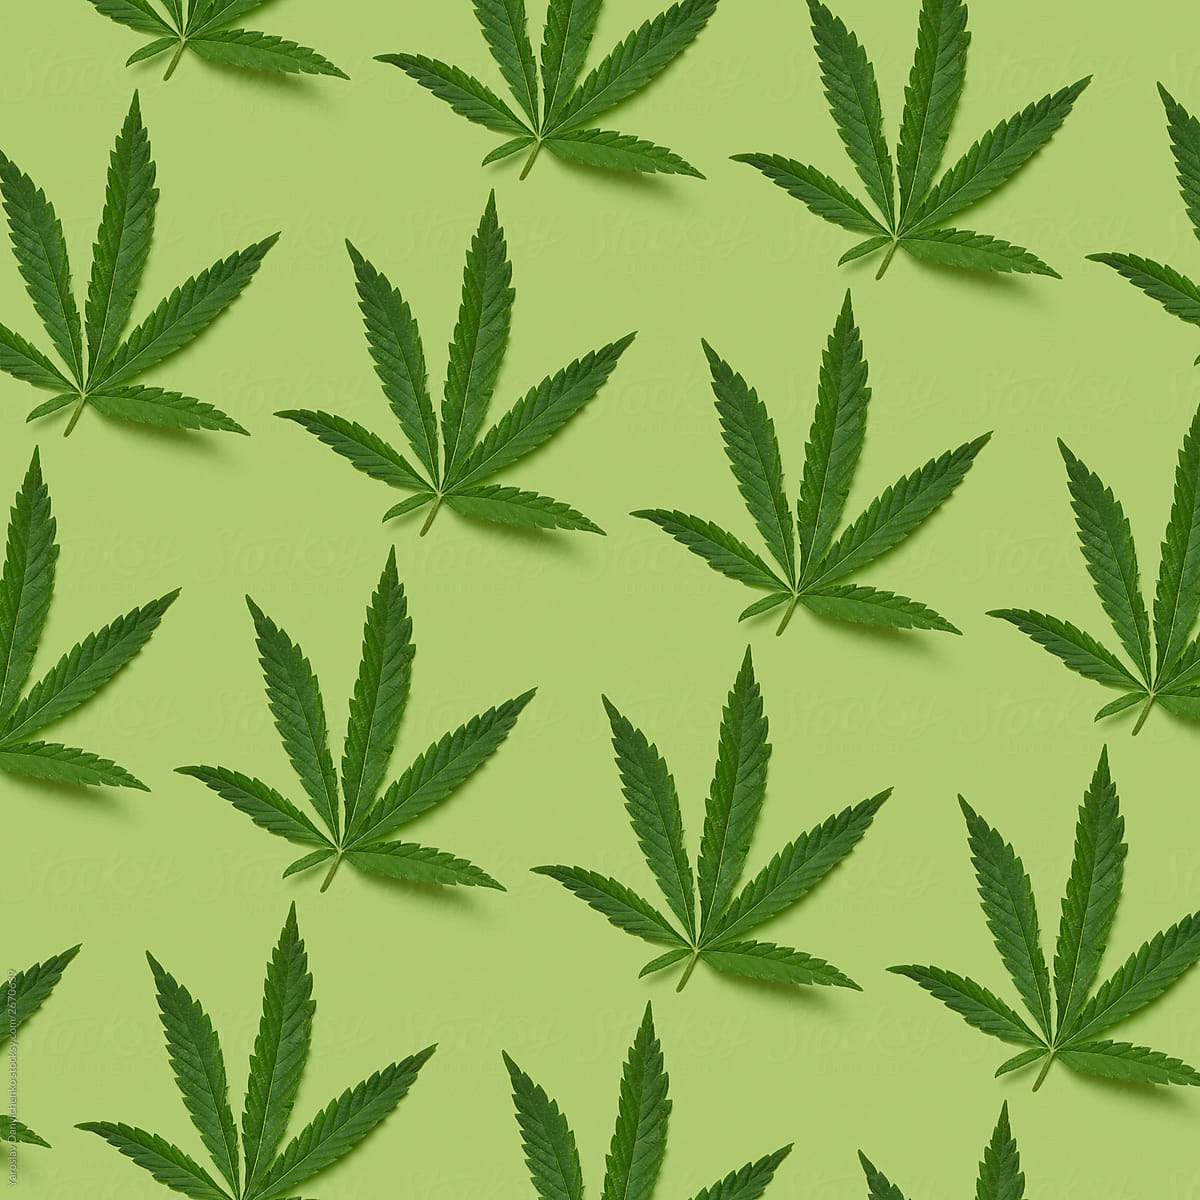 Pattern of fresh cannabis leaves